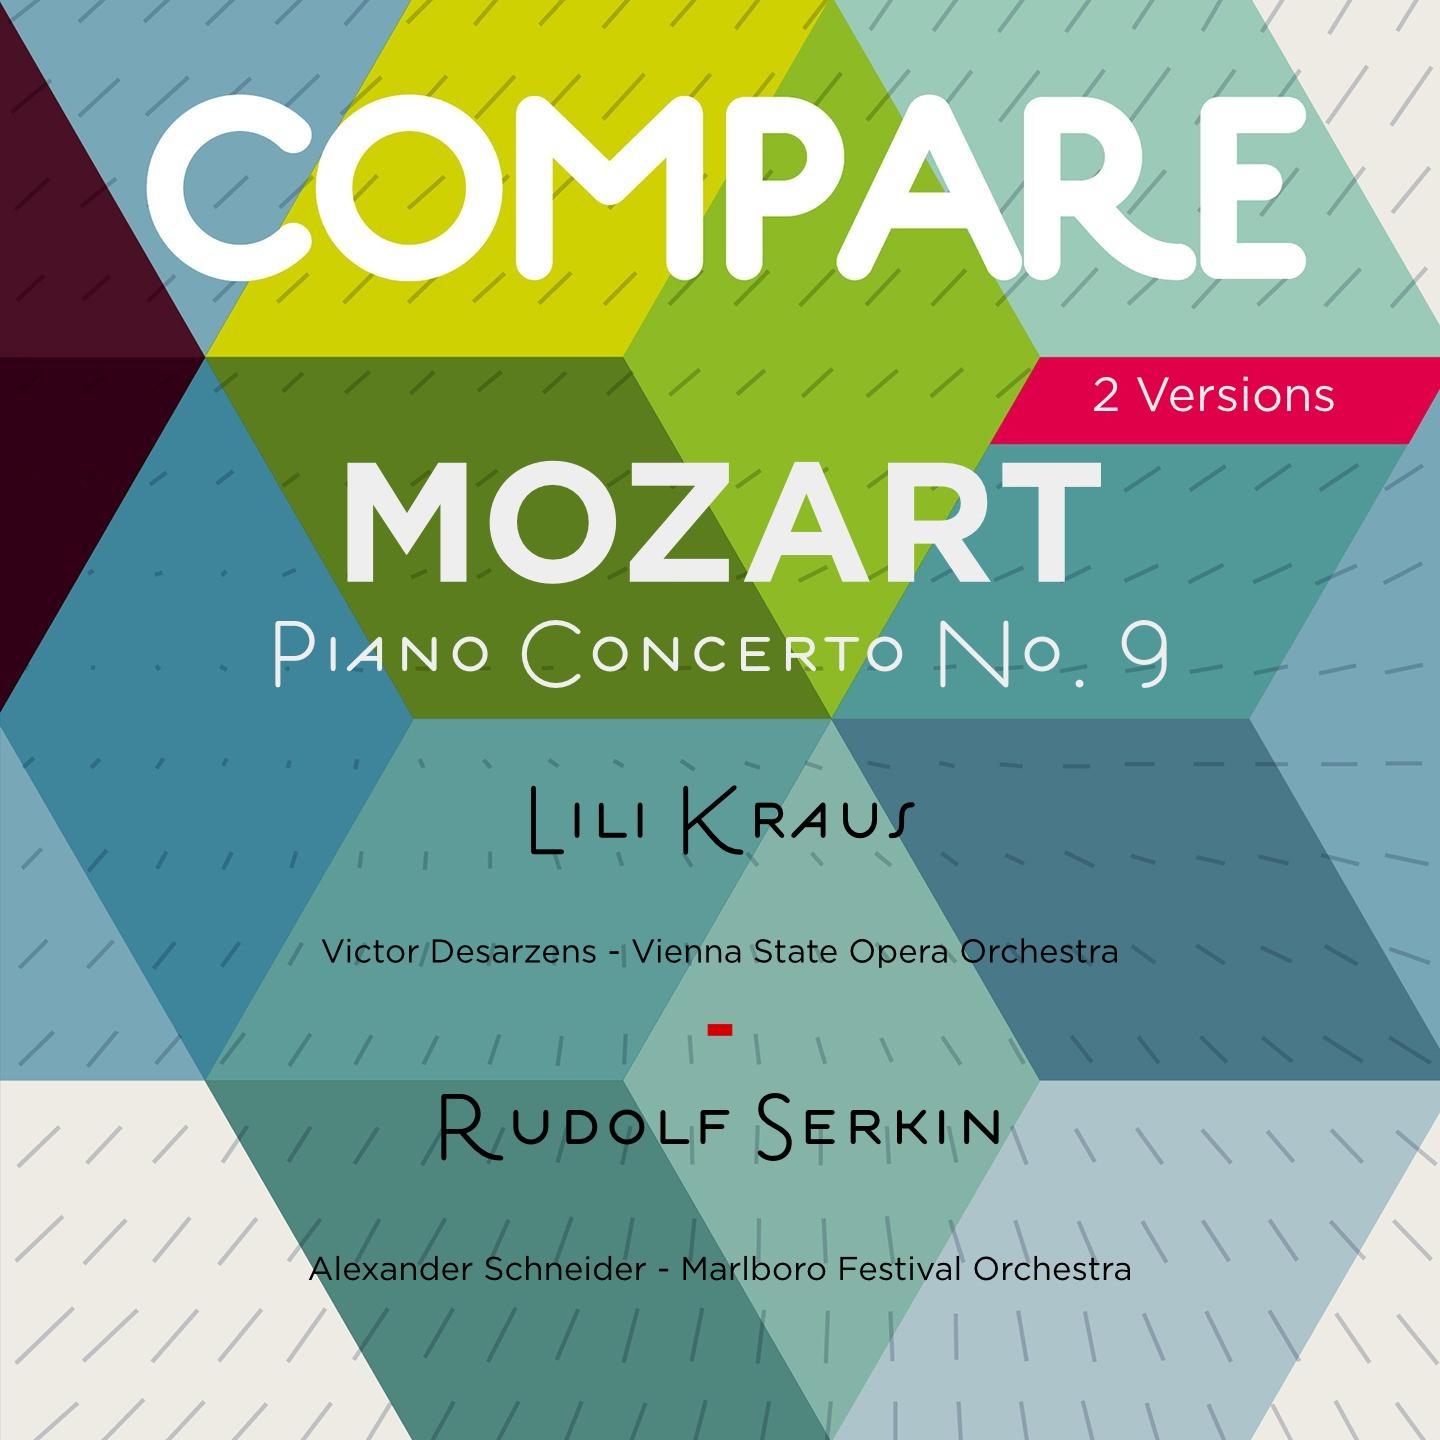 Постер альбома Mozart: Piano Concerto No. 9, K. 271, Lili Kraus vs. Rudolf Serkin (Compare 2 Versions)